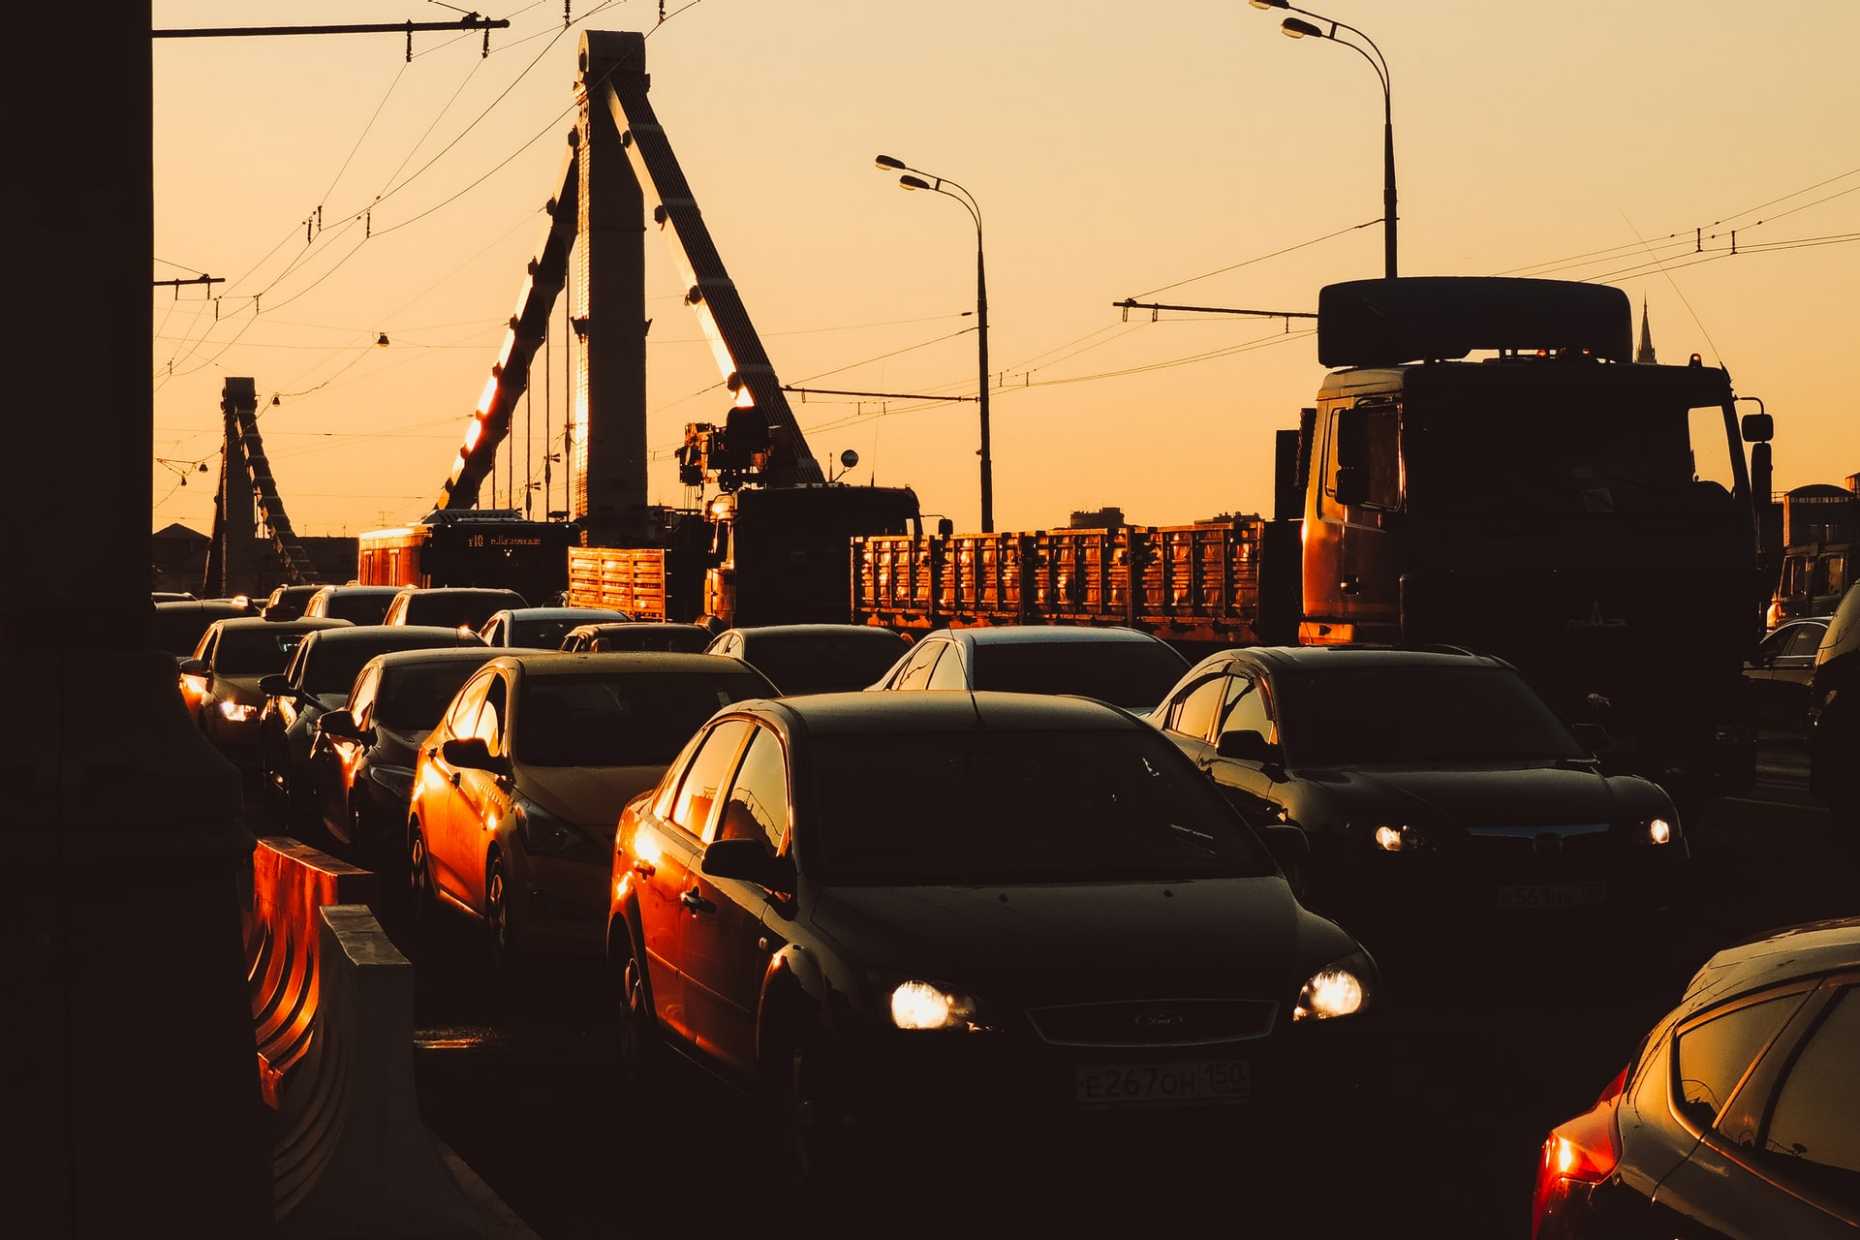 Congestion Image by Max Titov on Unsplash